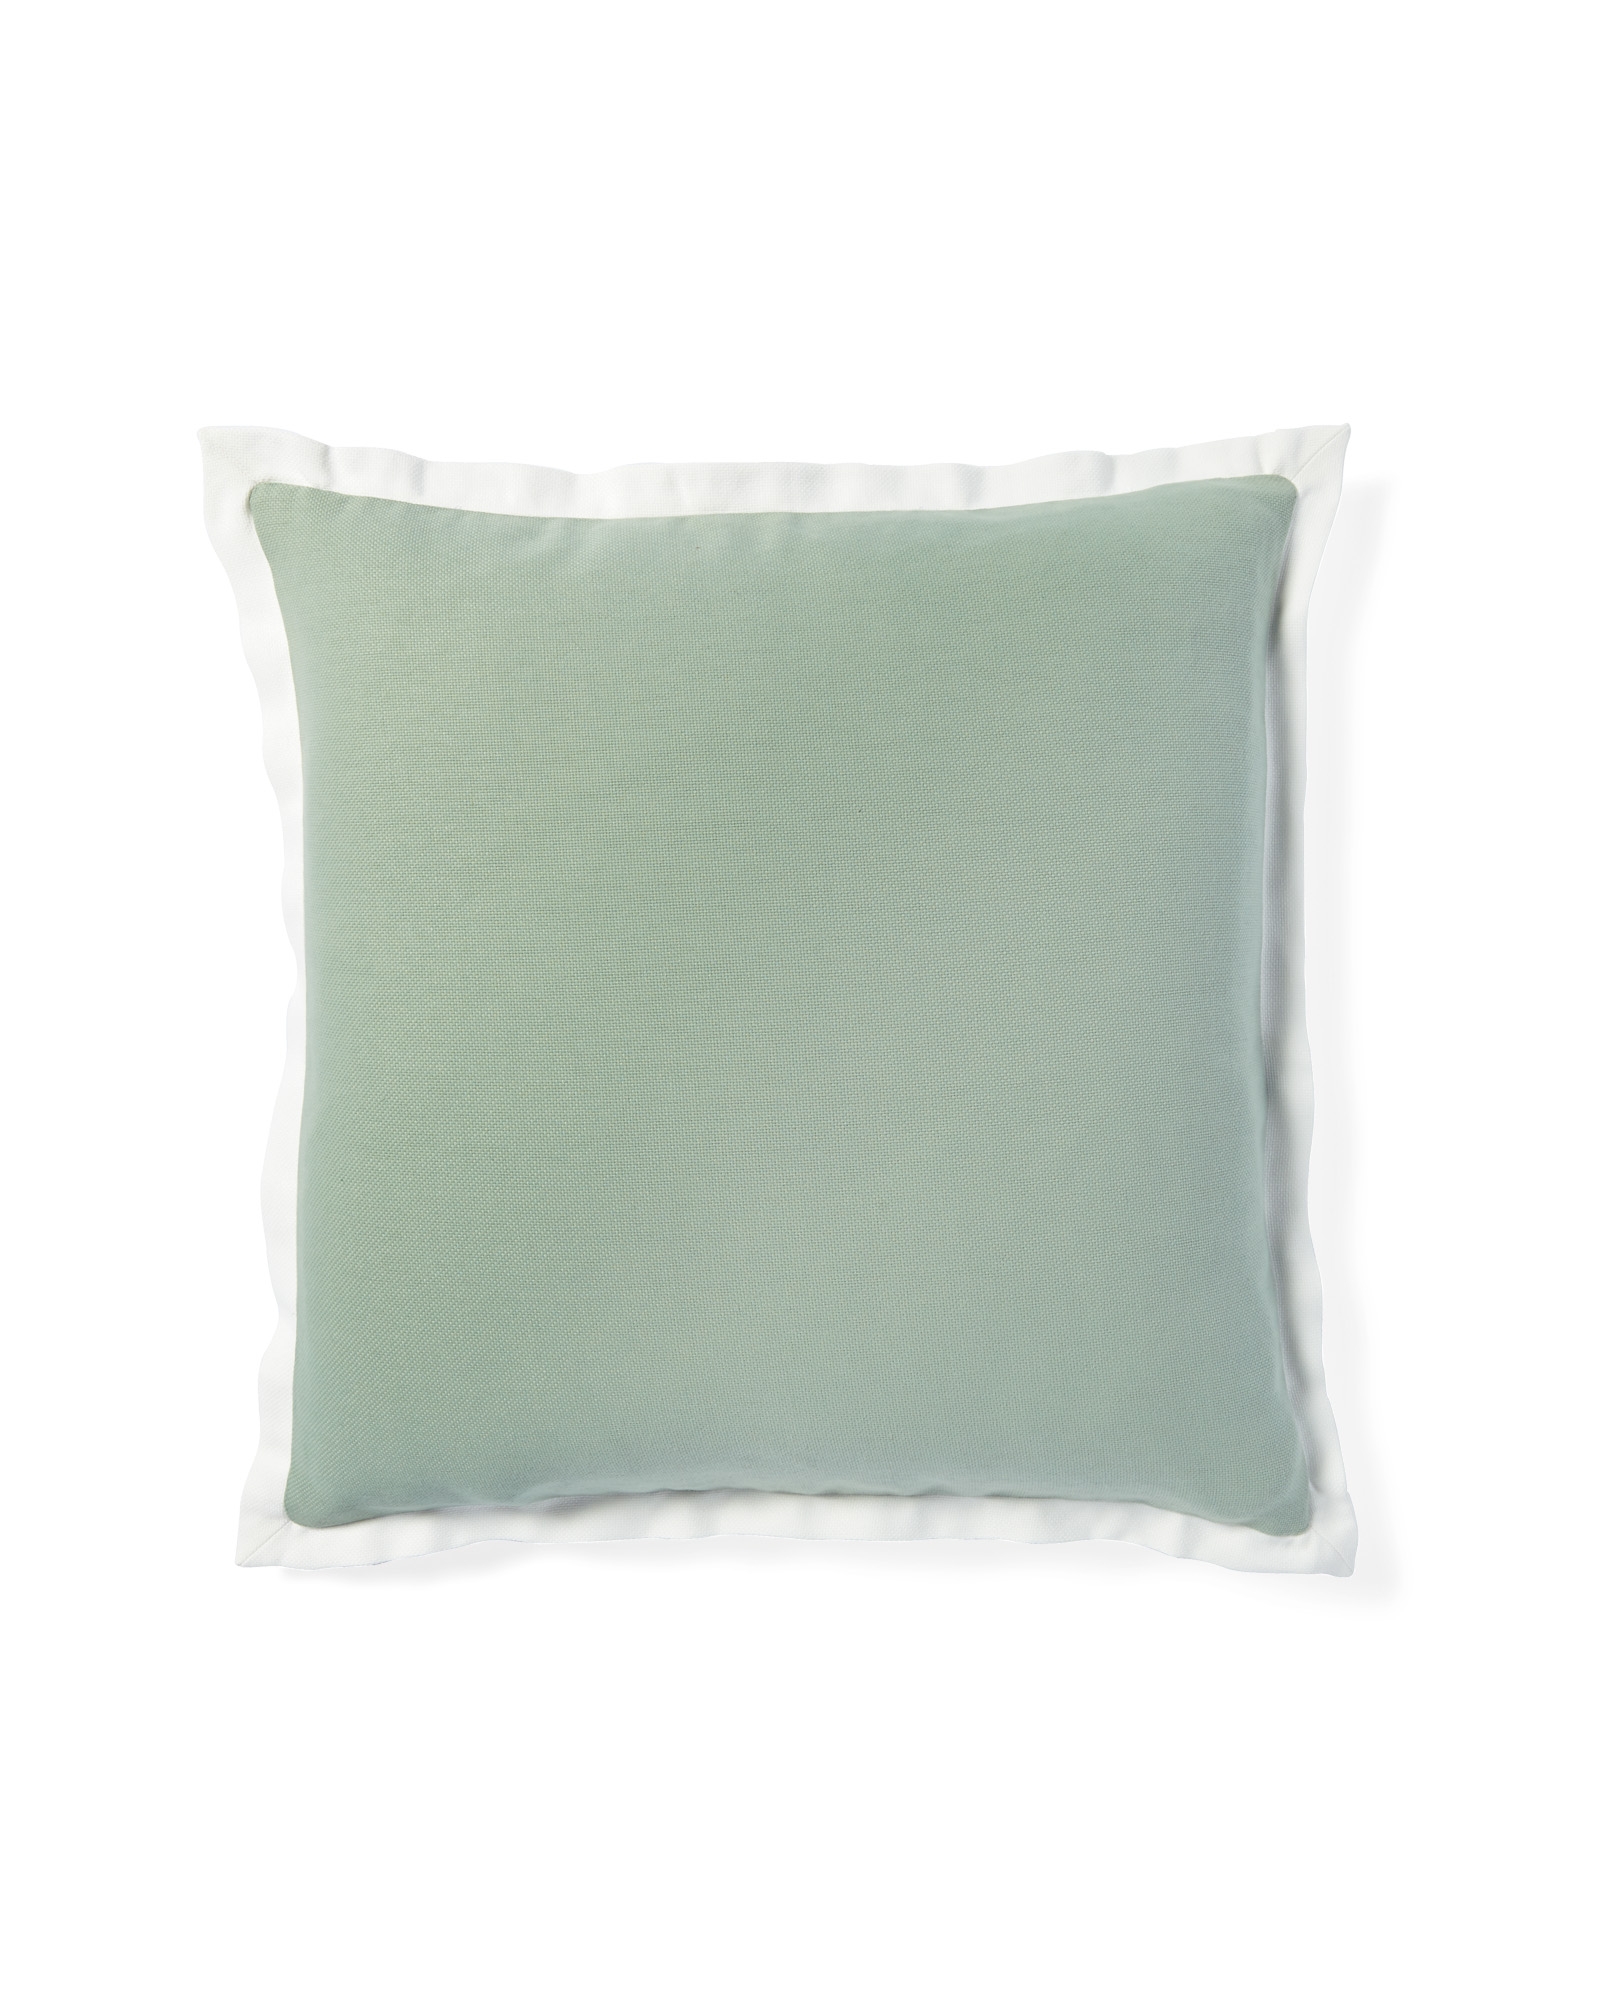 Border Frame Outdoor Pillow Cover - Image 0